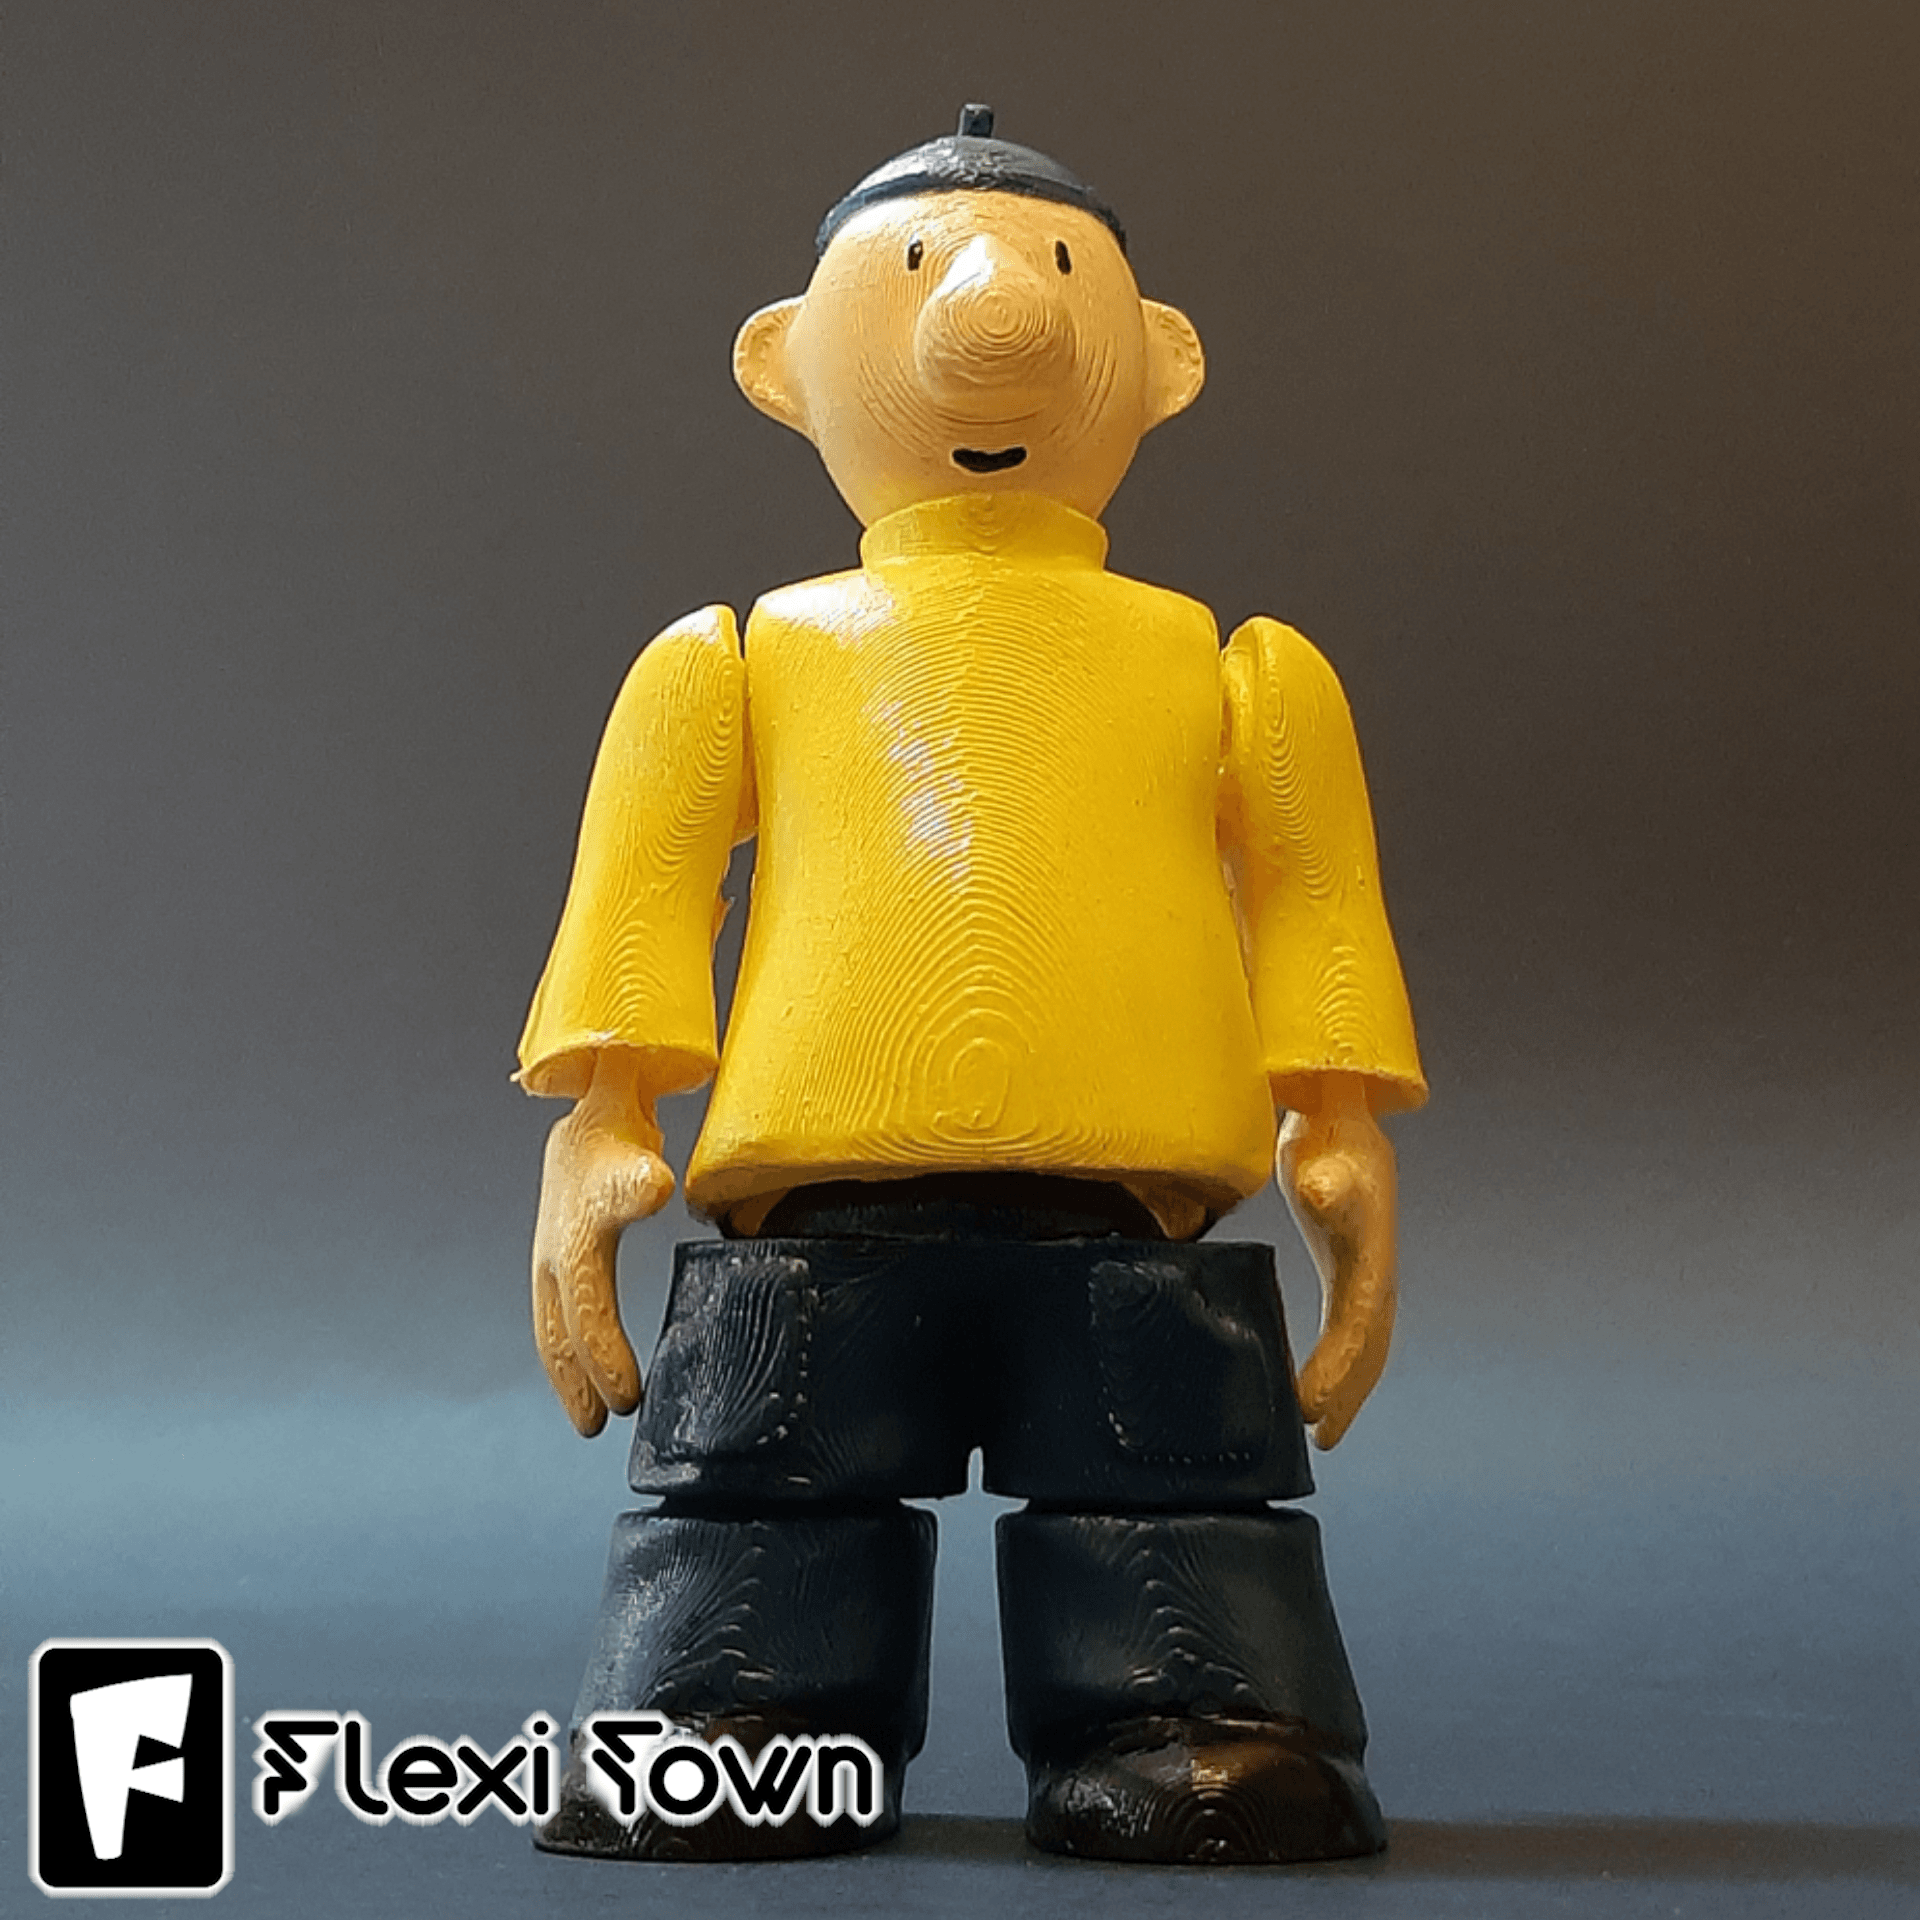 Flexi Print-in-Place Pat 3d model